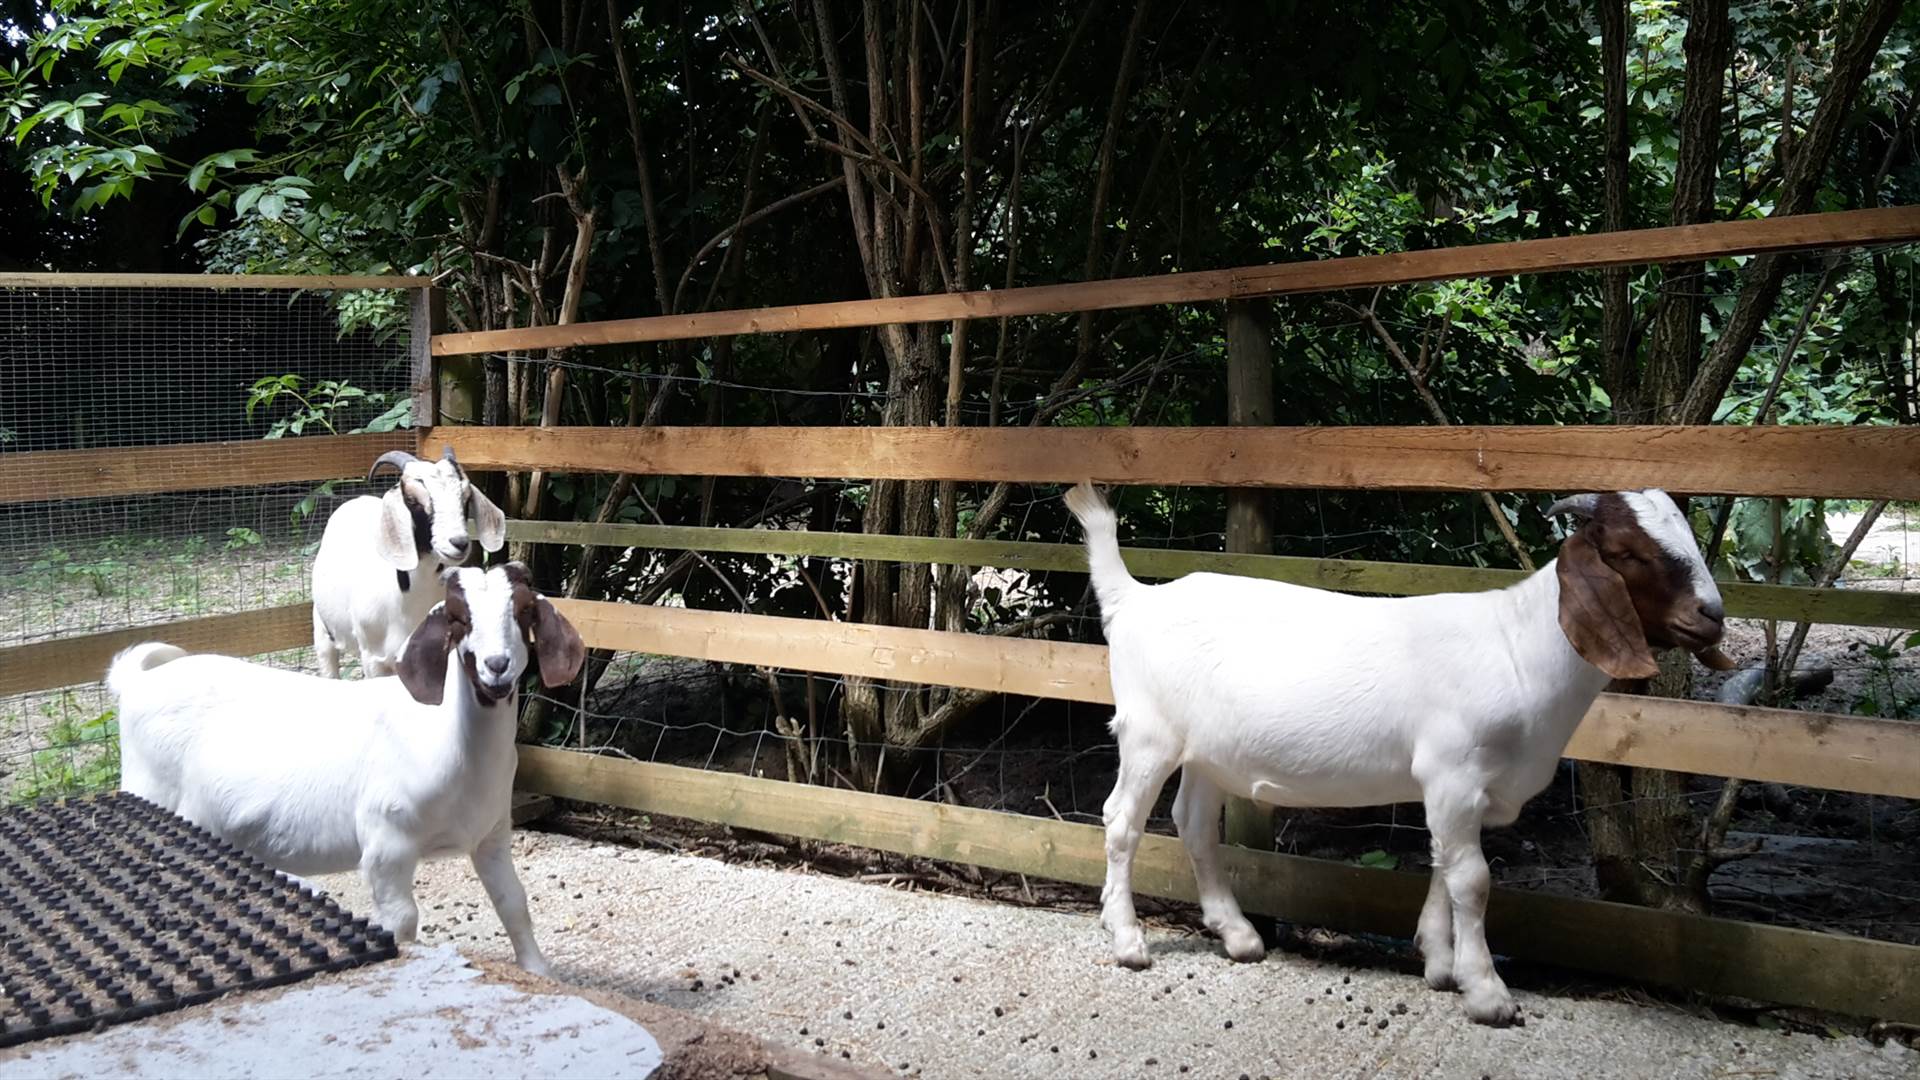 Goats 22 June 2018.jpg  by Mo